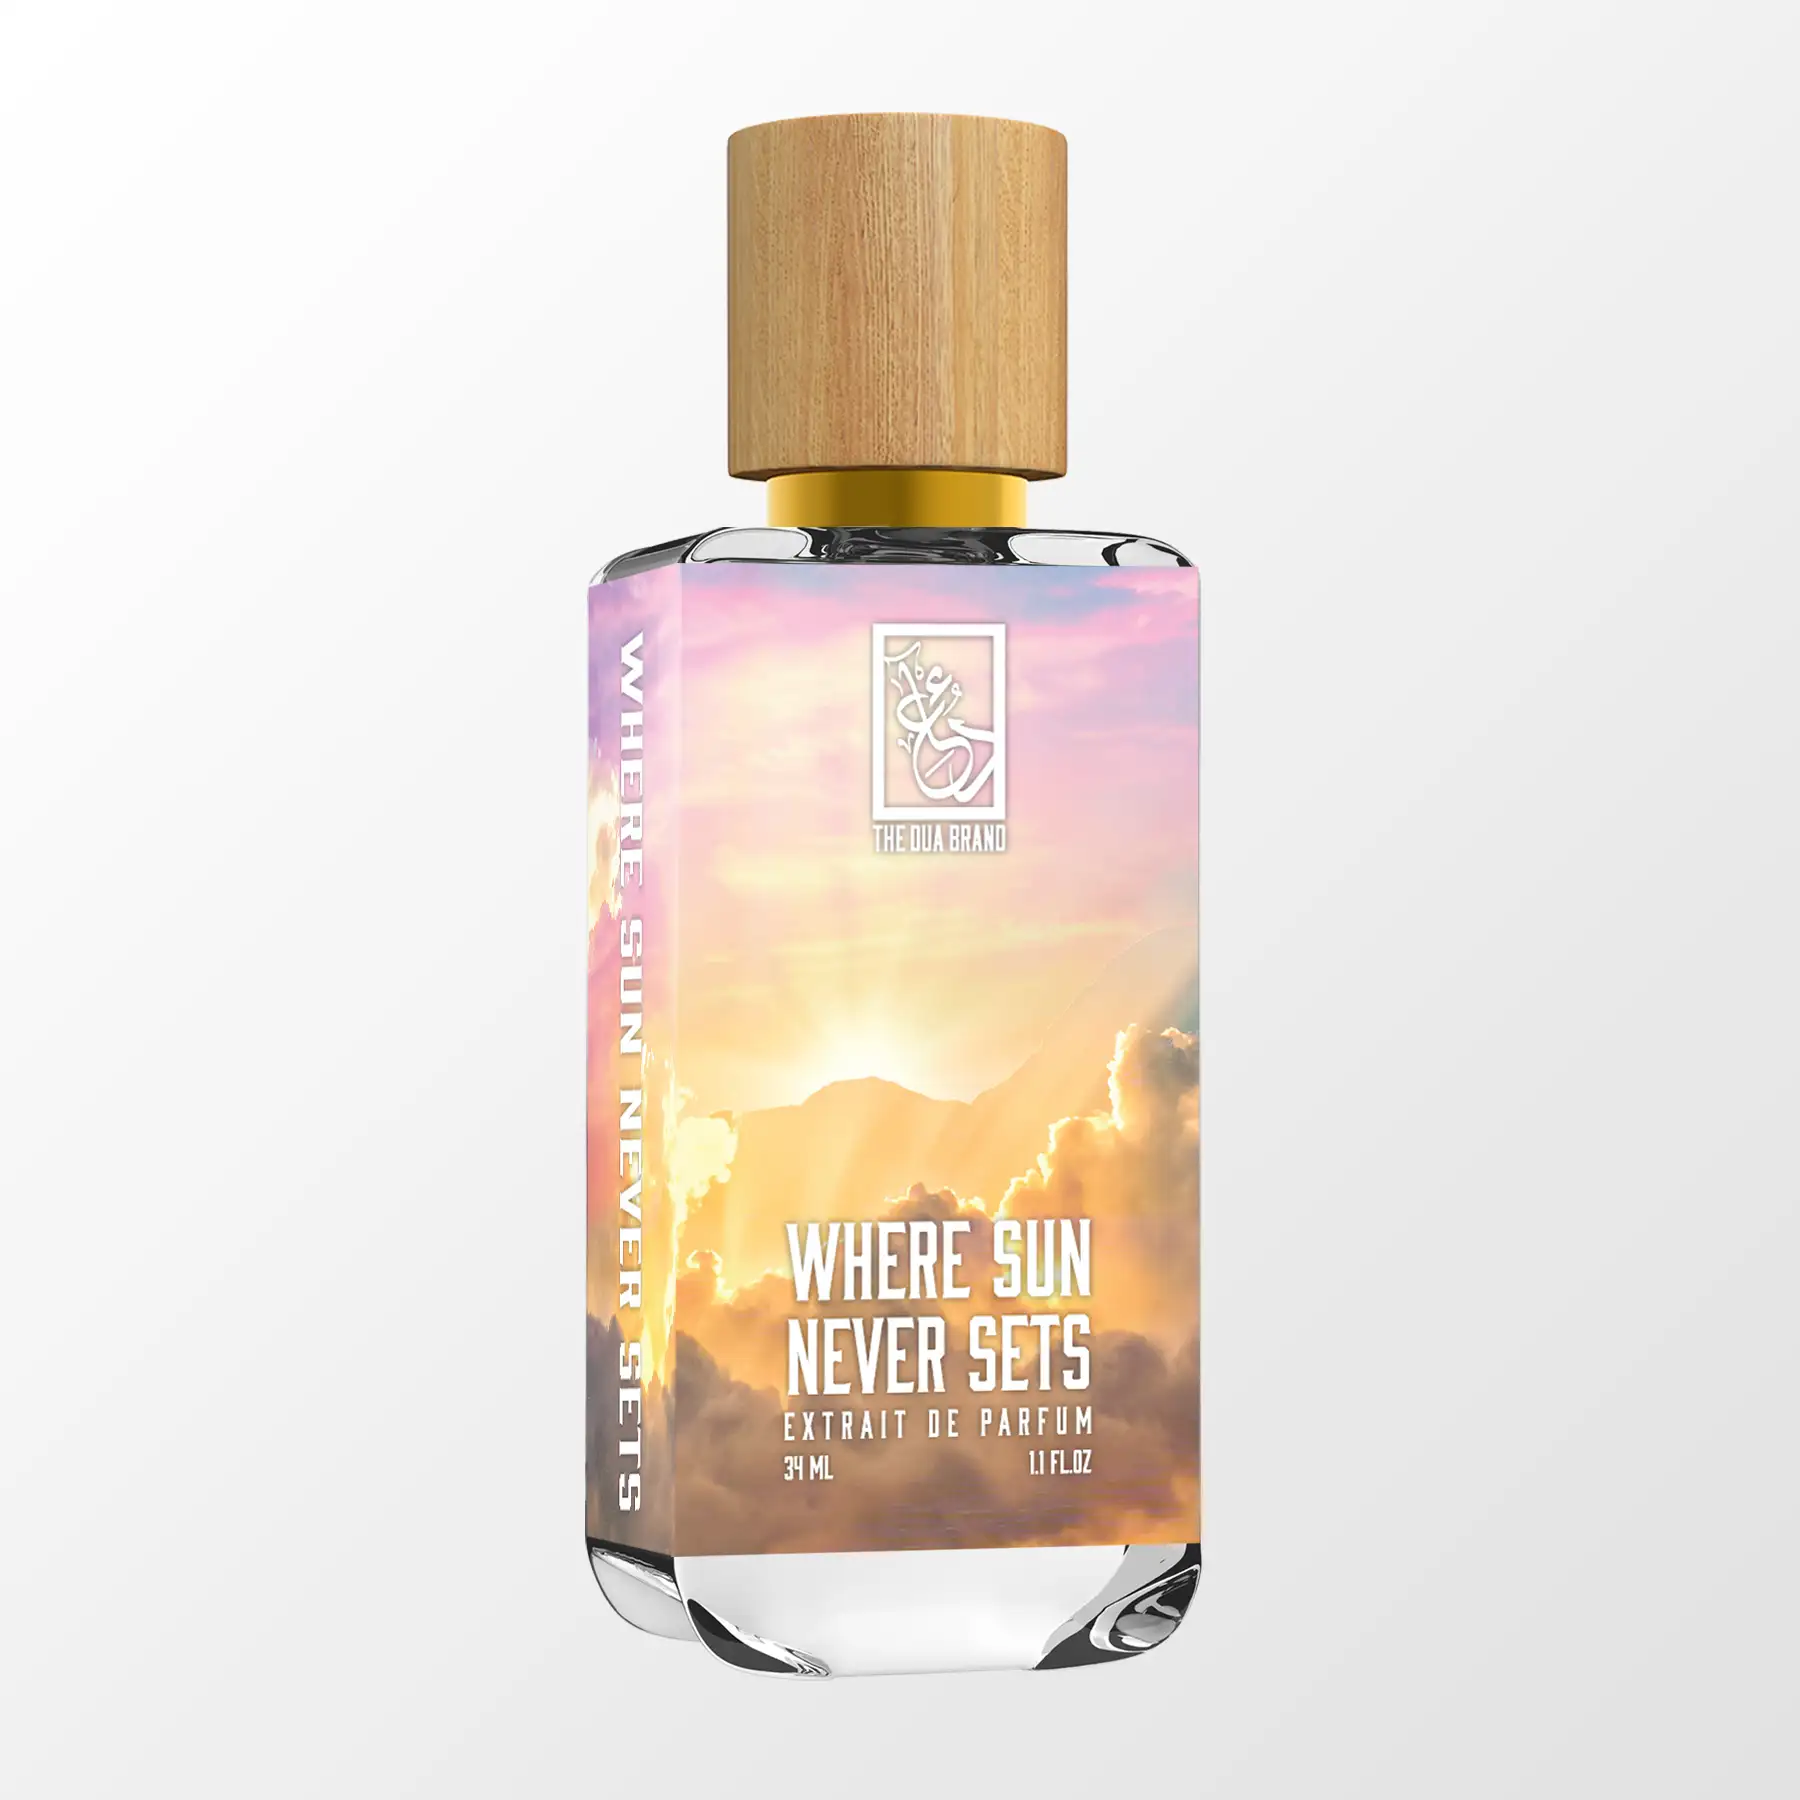 Where Unisex - - - - Perfume Never - Ford De by Soleil Sun DUA 34ml/1.1 FRAGRANCES Sets Extrait Tom Inspired FL Parfum Blanc OZ